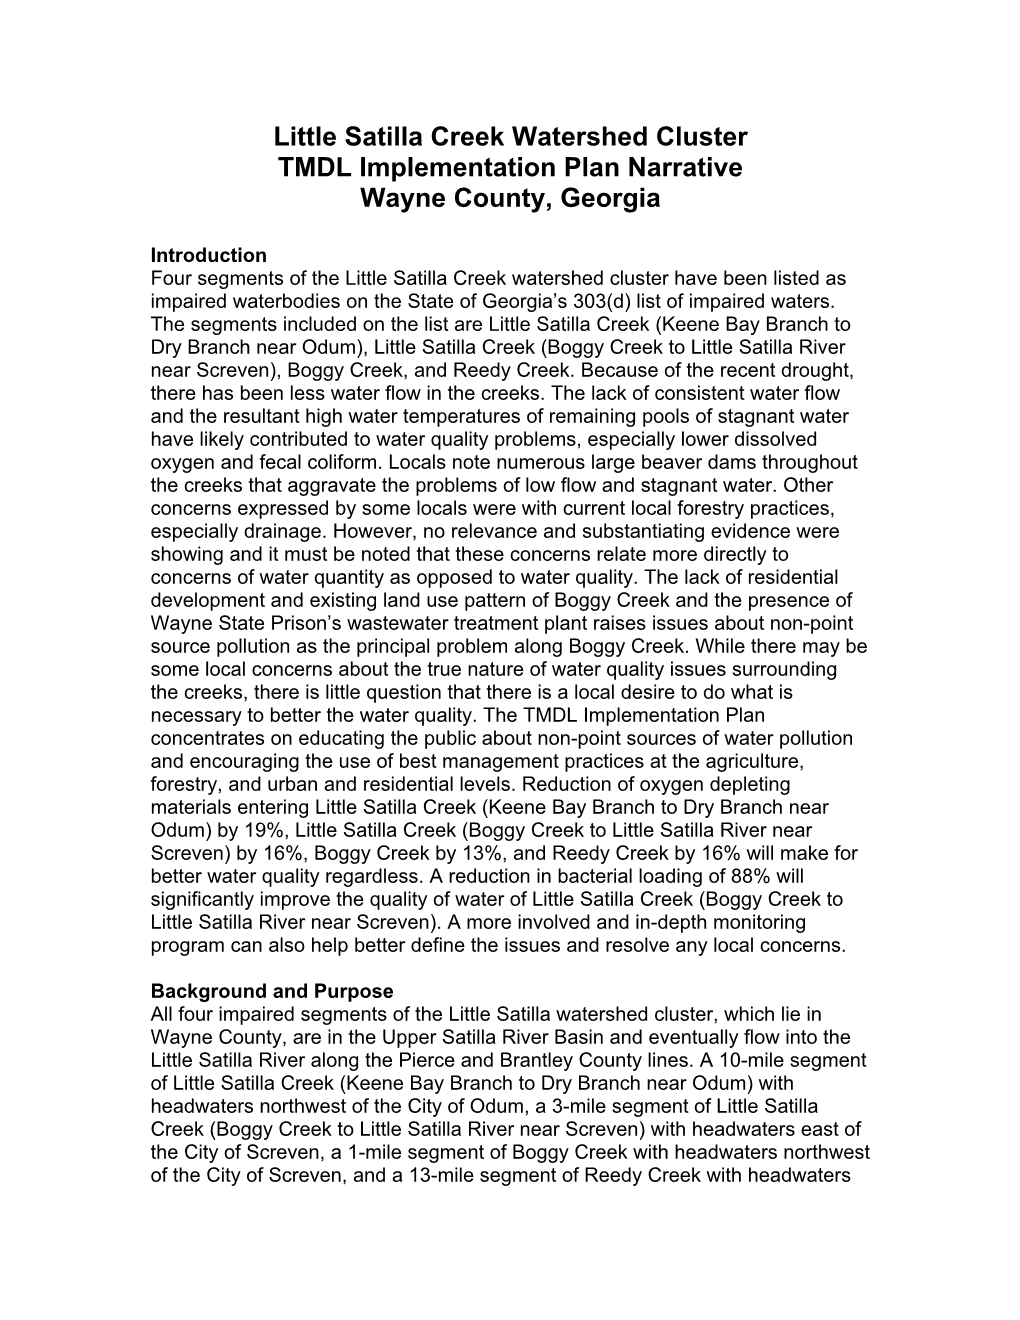 Little Satilla Creek Watershed Cluster TMDL Implementation Plan Narrative Wayne County, Georgia